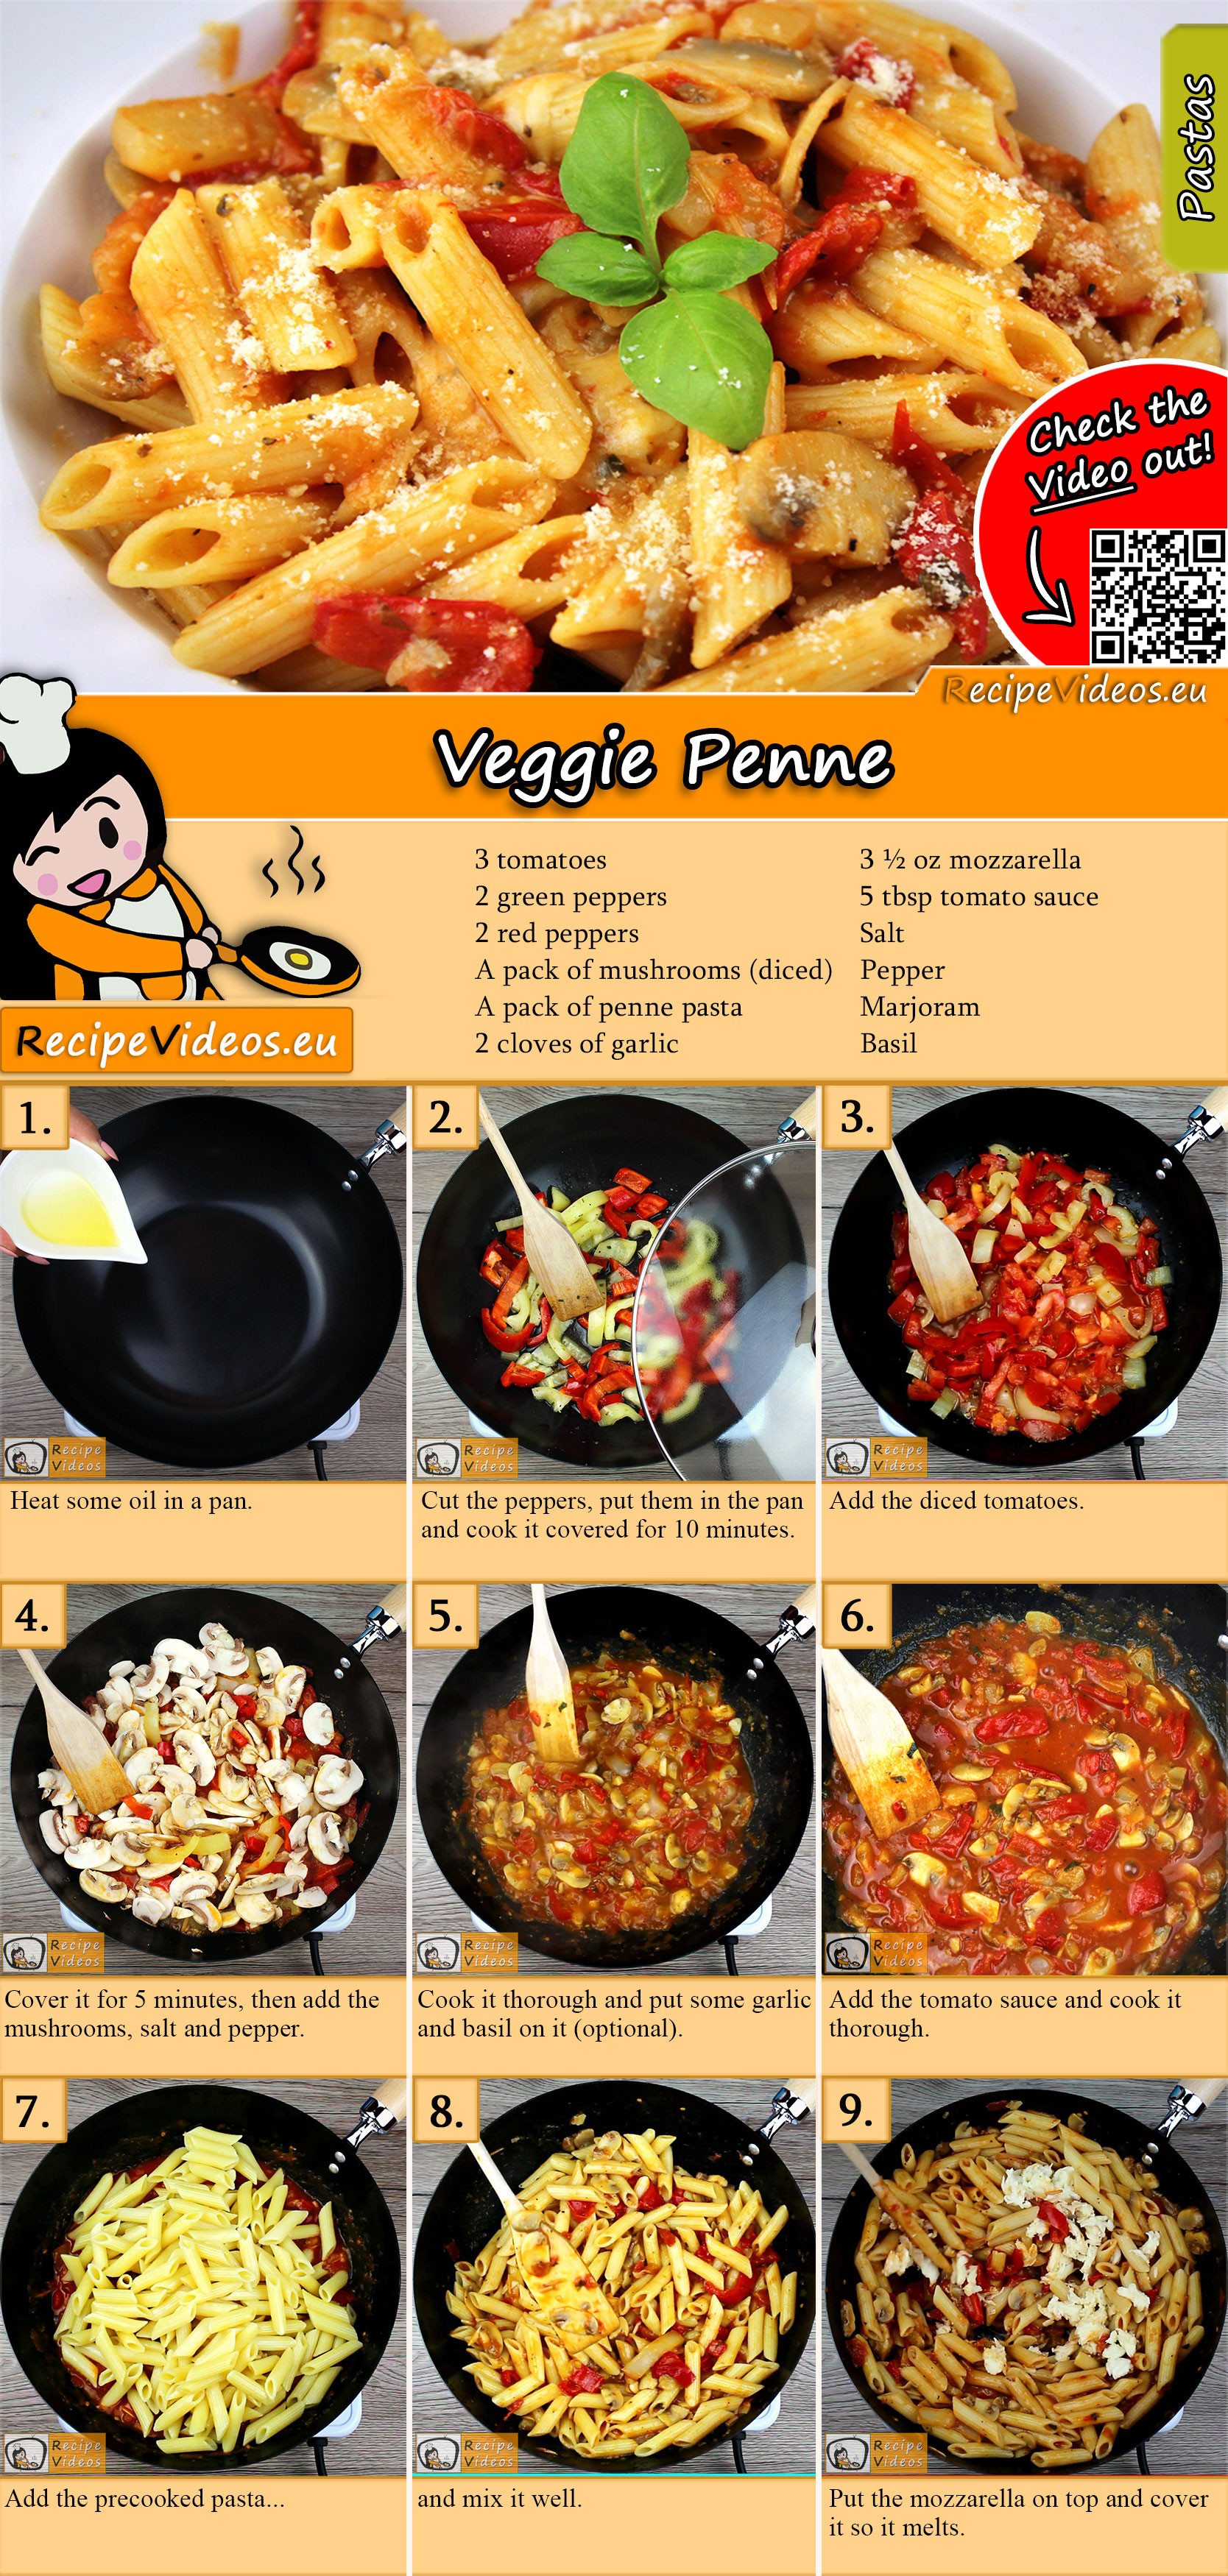 Veggie Penne recipe with video